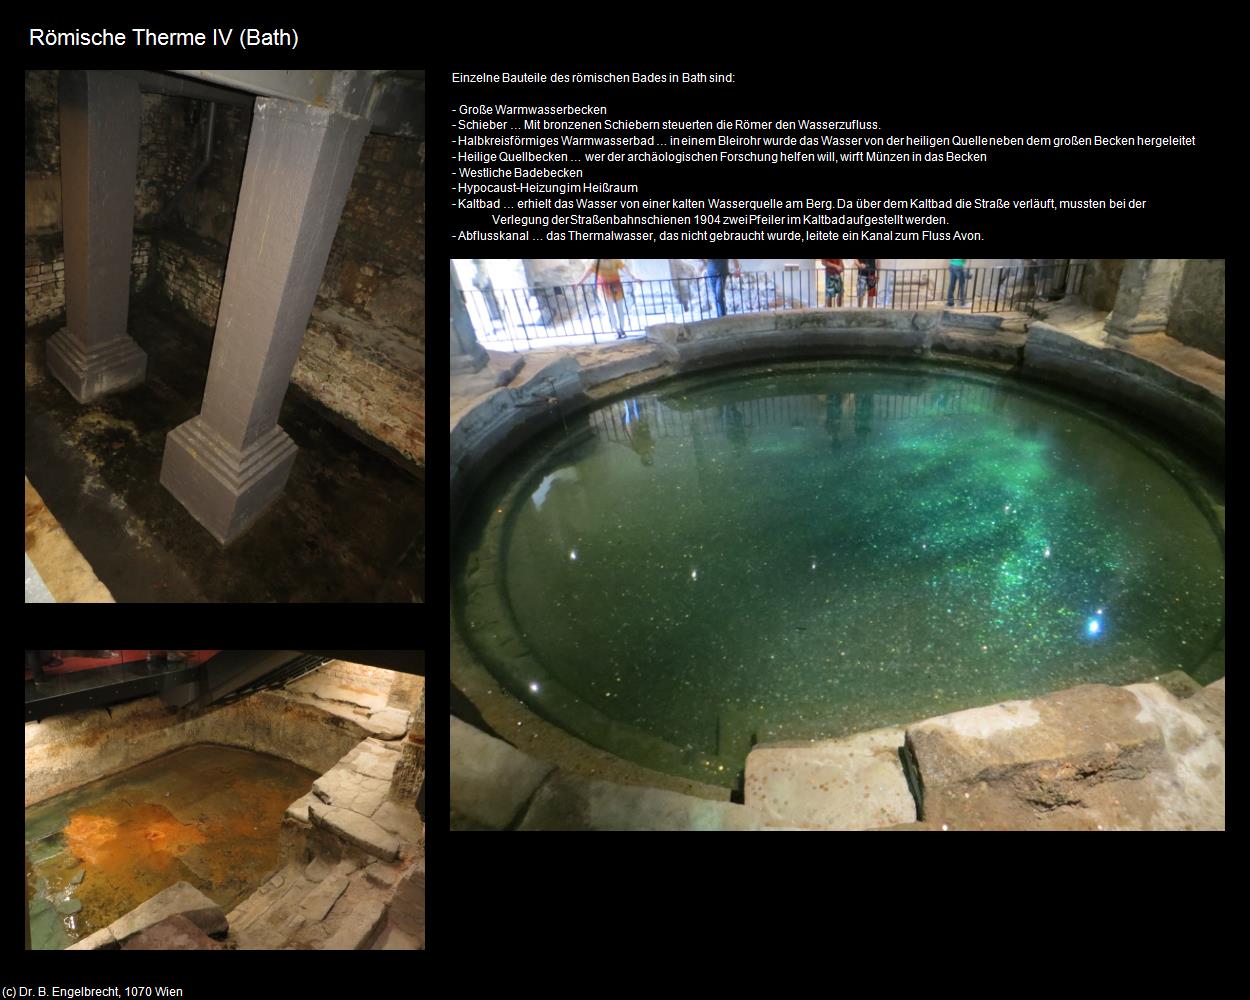 Römische Therme IV (Bath, England) in Kulturatlas-ENGLAND und WALES